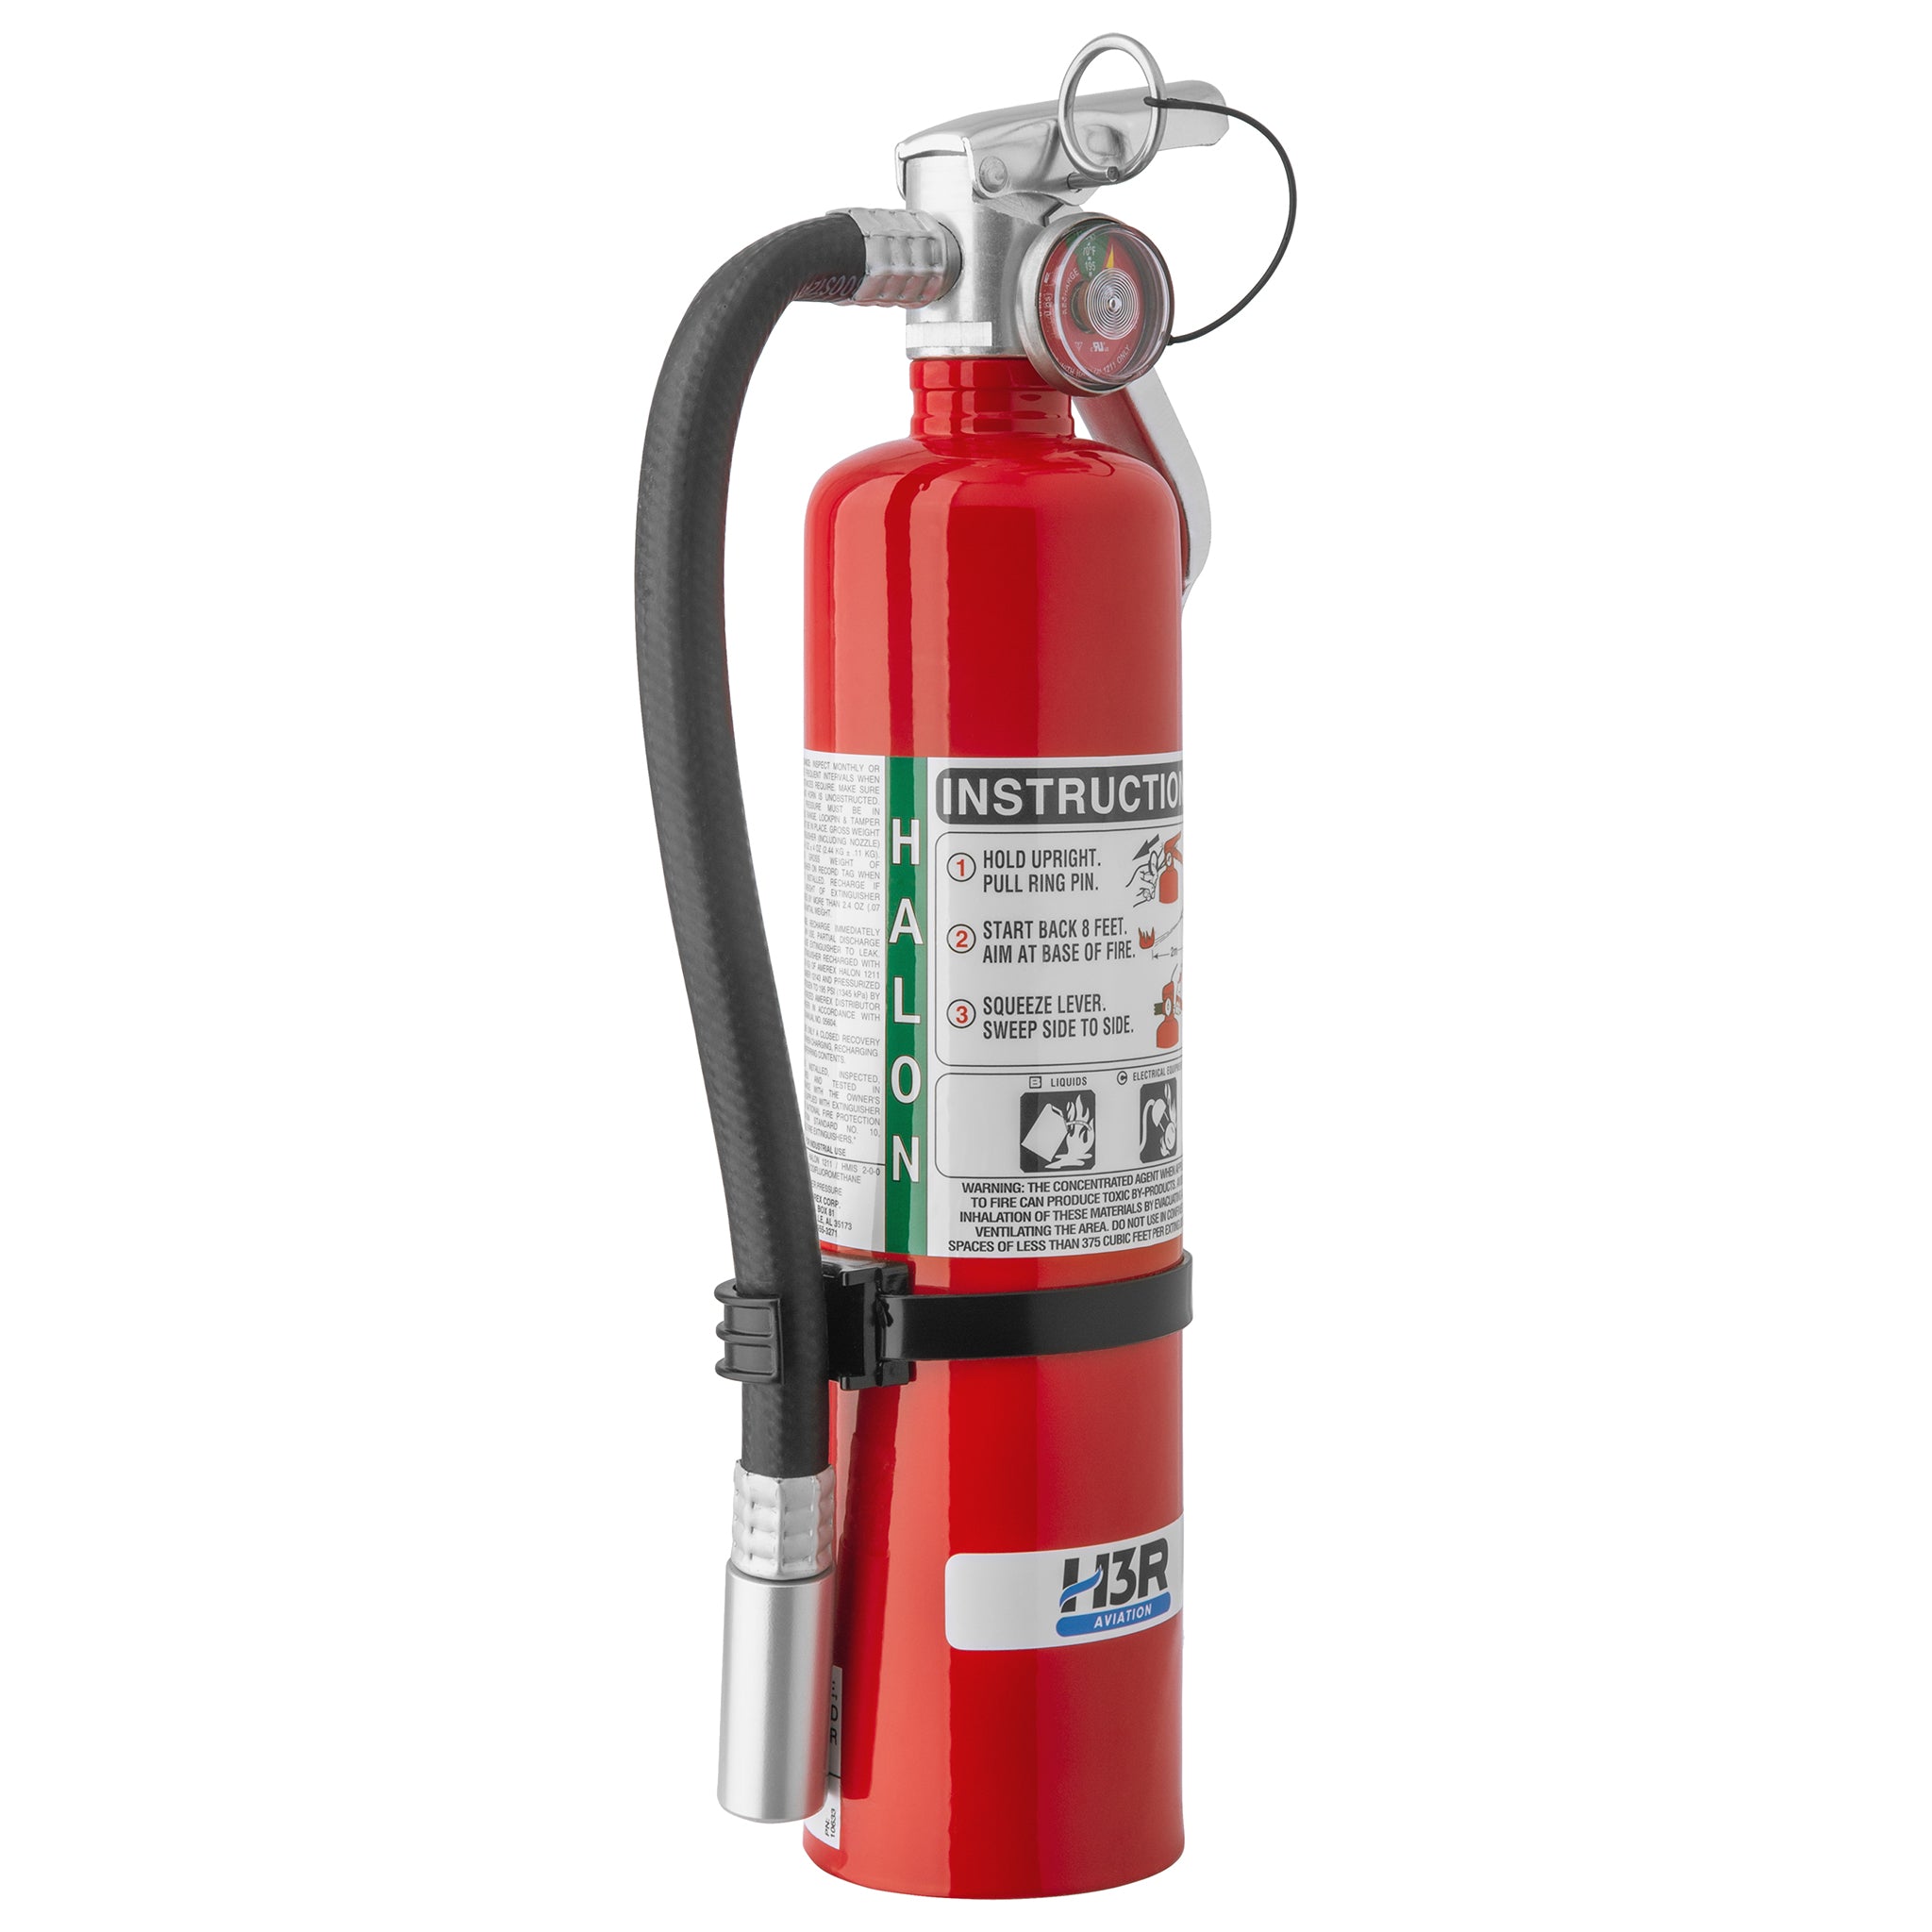 C354TS - 3.0 lb. Halon Fire Extinguisher